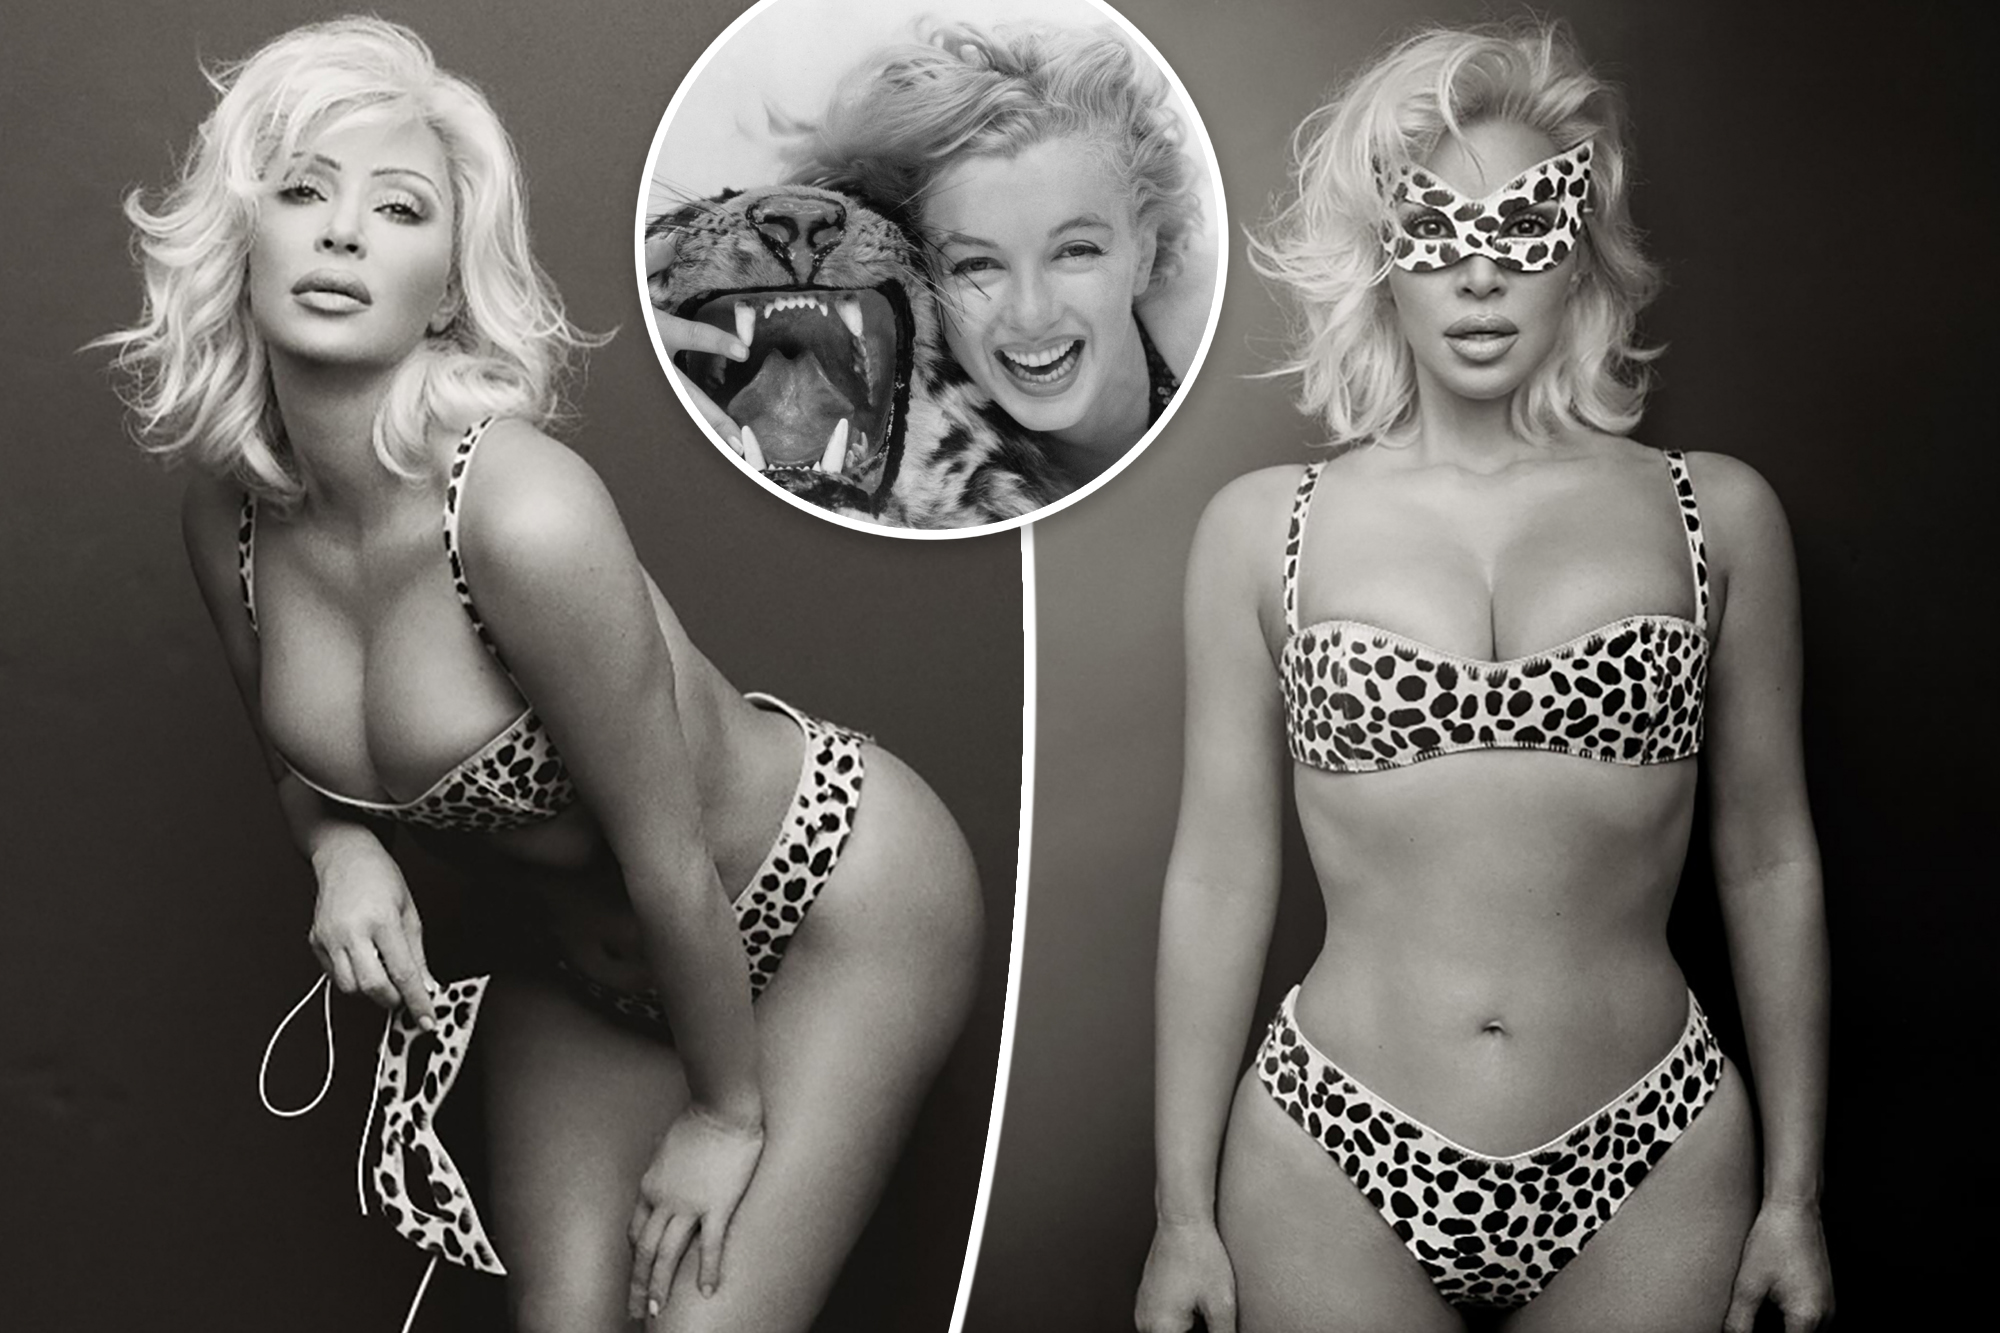 Kim Kardashian Channels Marilyn Monroe in Stunning Animal-Print Bikini Shoot